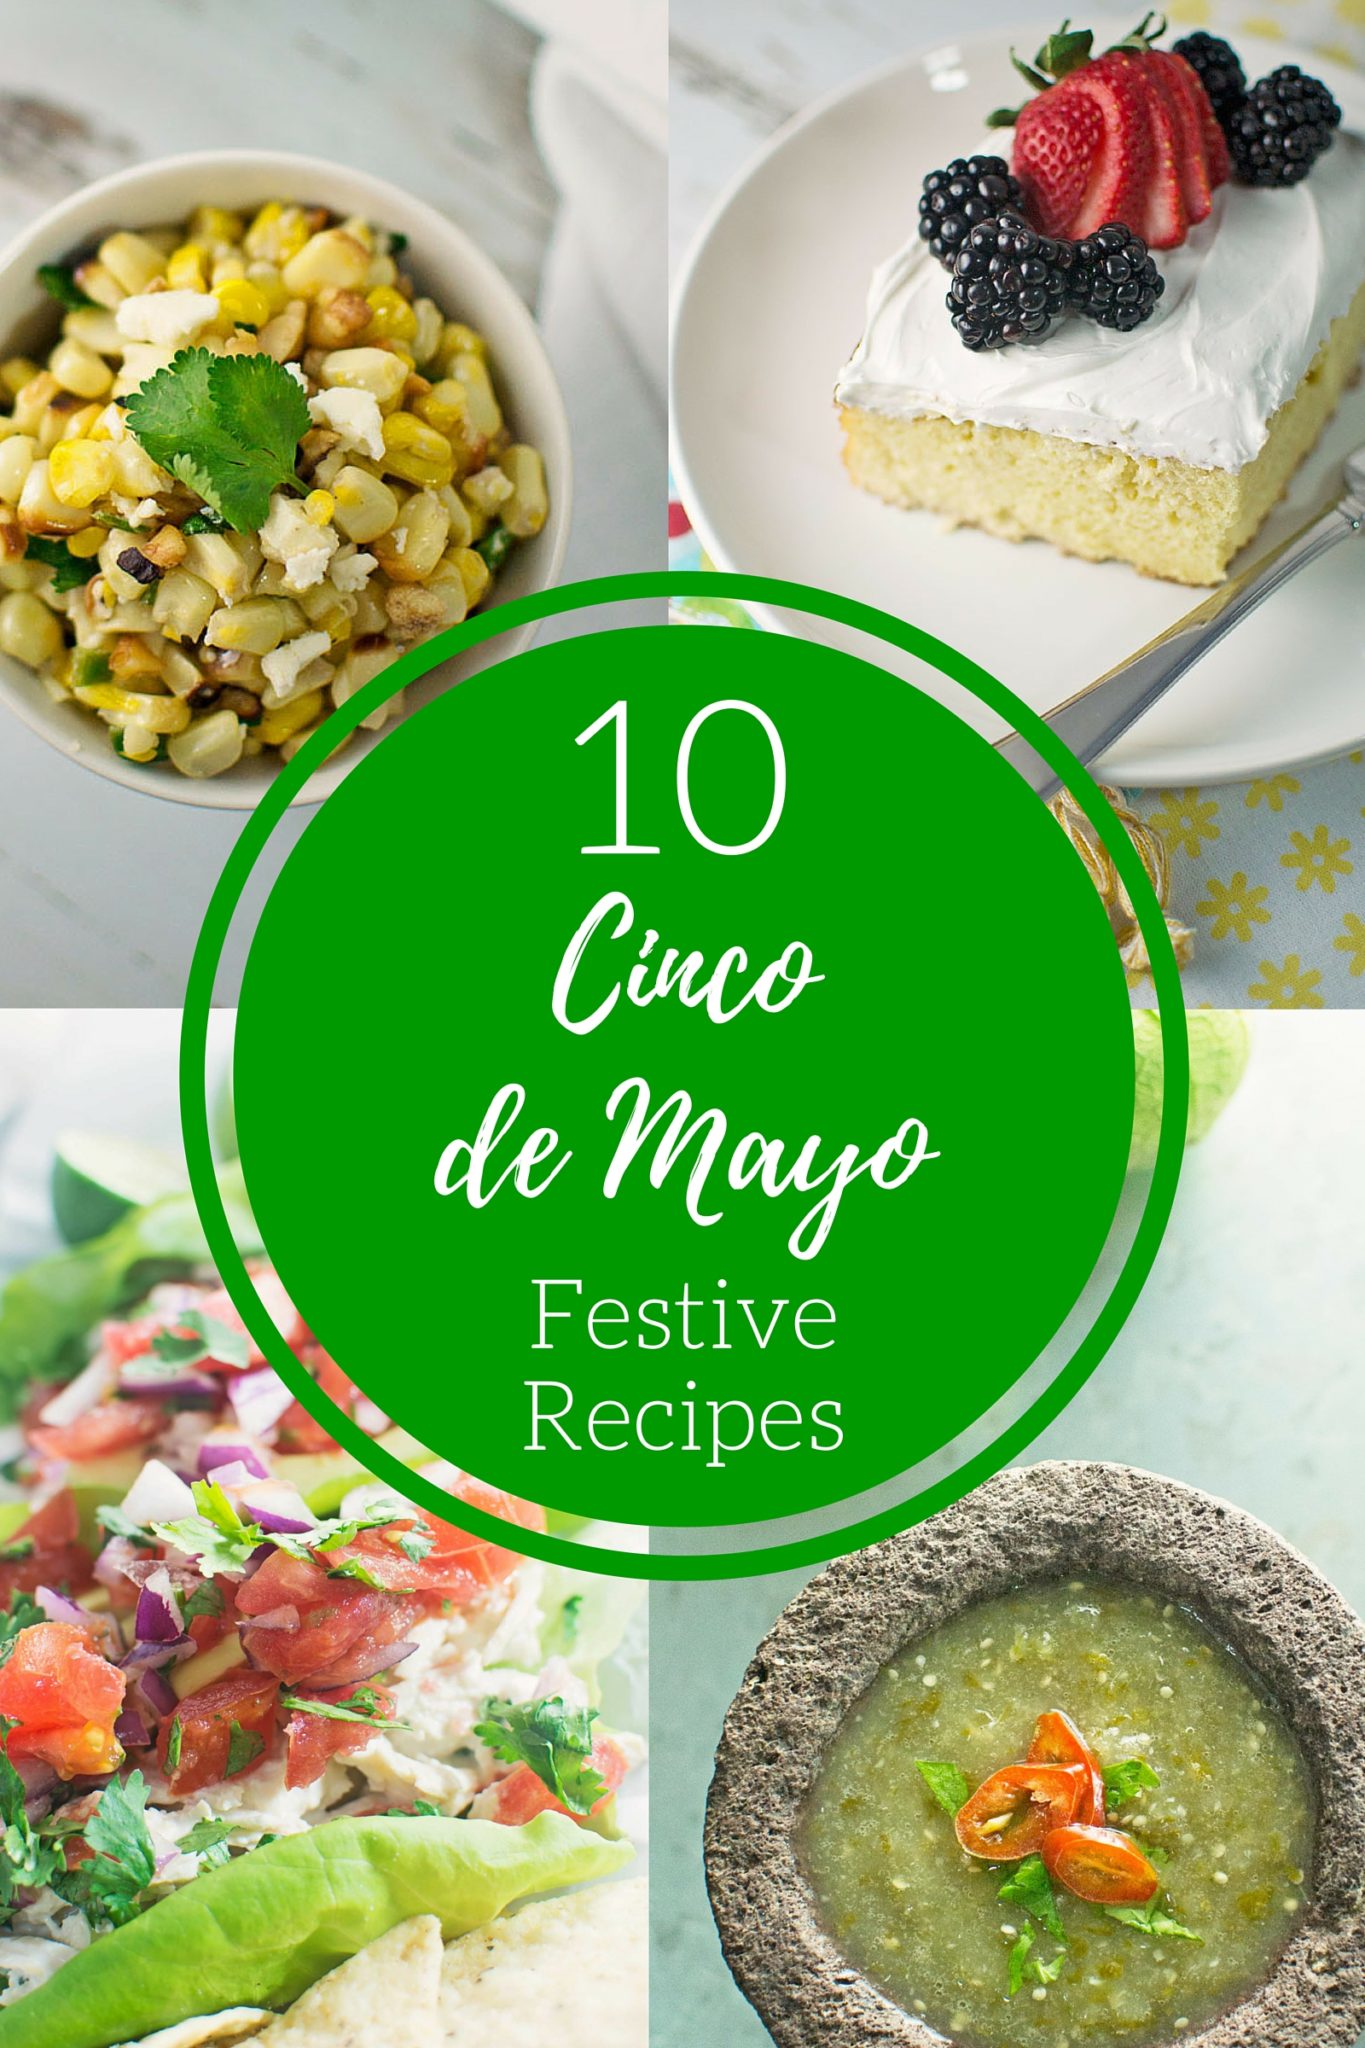 10 Cinco de Mayo Festive Recipes that will keep that are fiesta worthy! #Recipes found @LittleFiggyFood